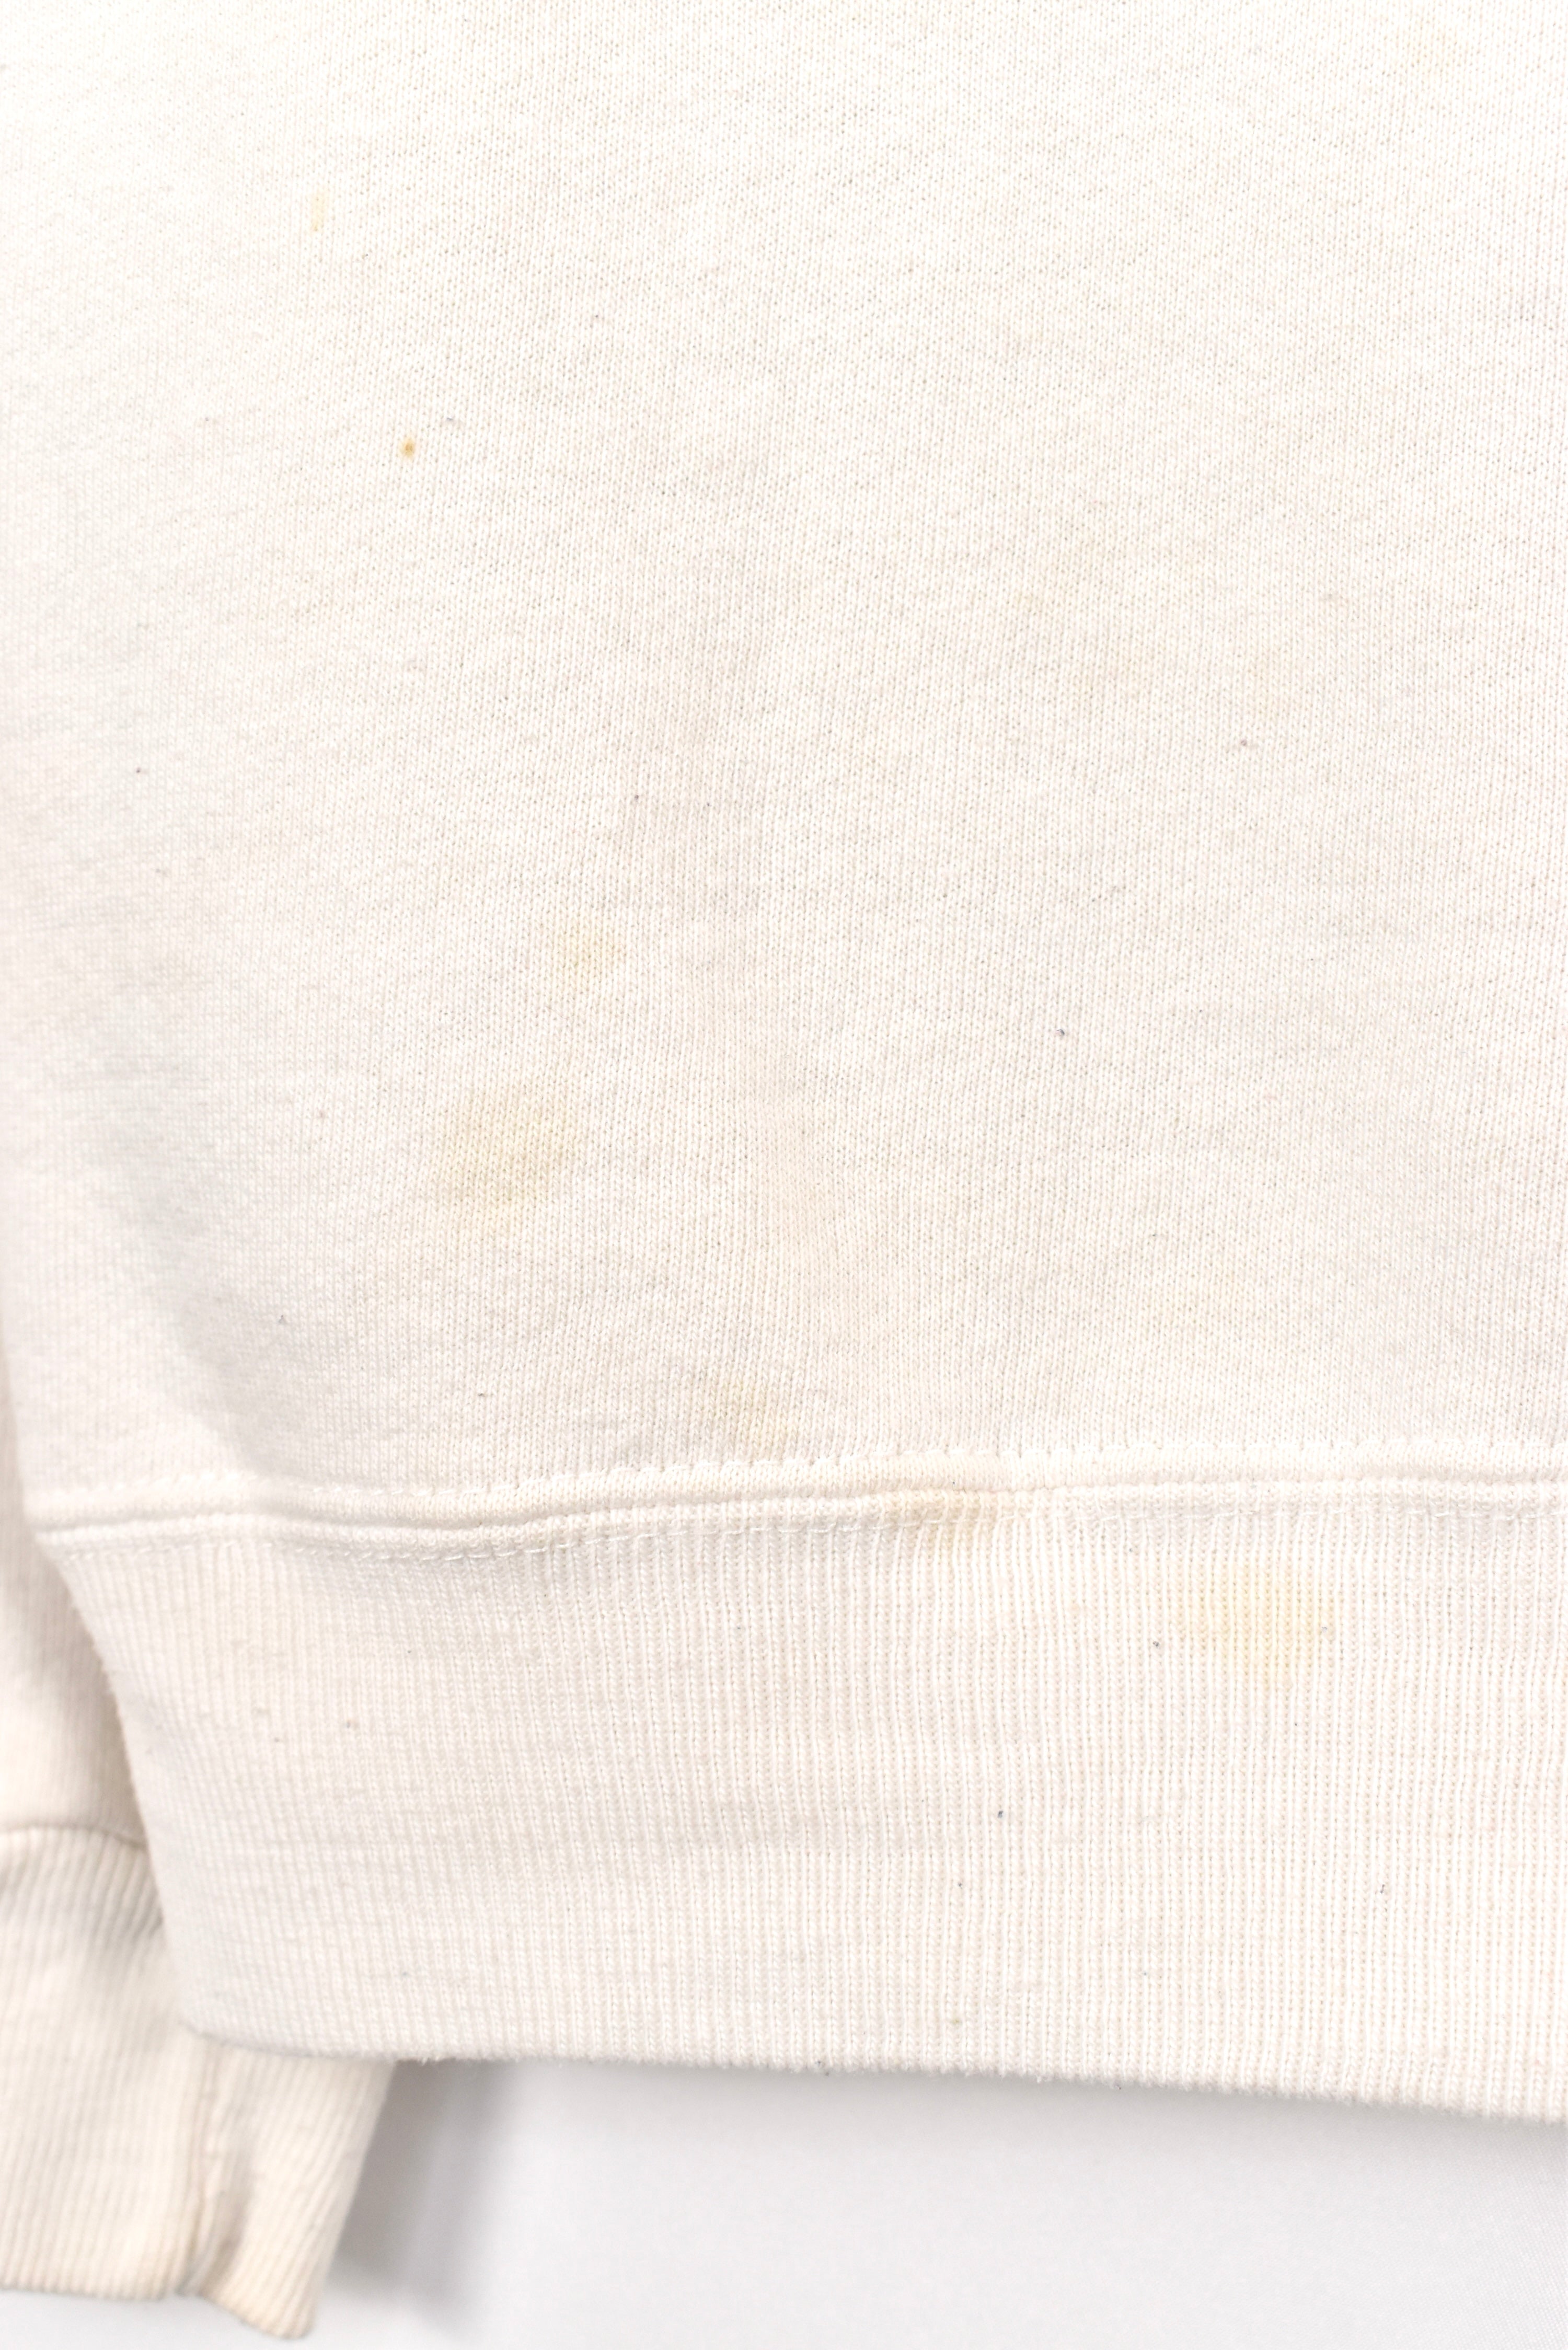 Vintage Lambda Chi Alpha sweatshirt, white fraternity crewneck - AU S COLLEGE